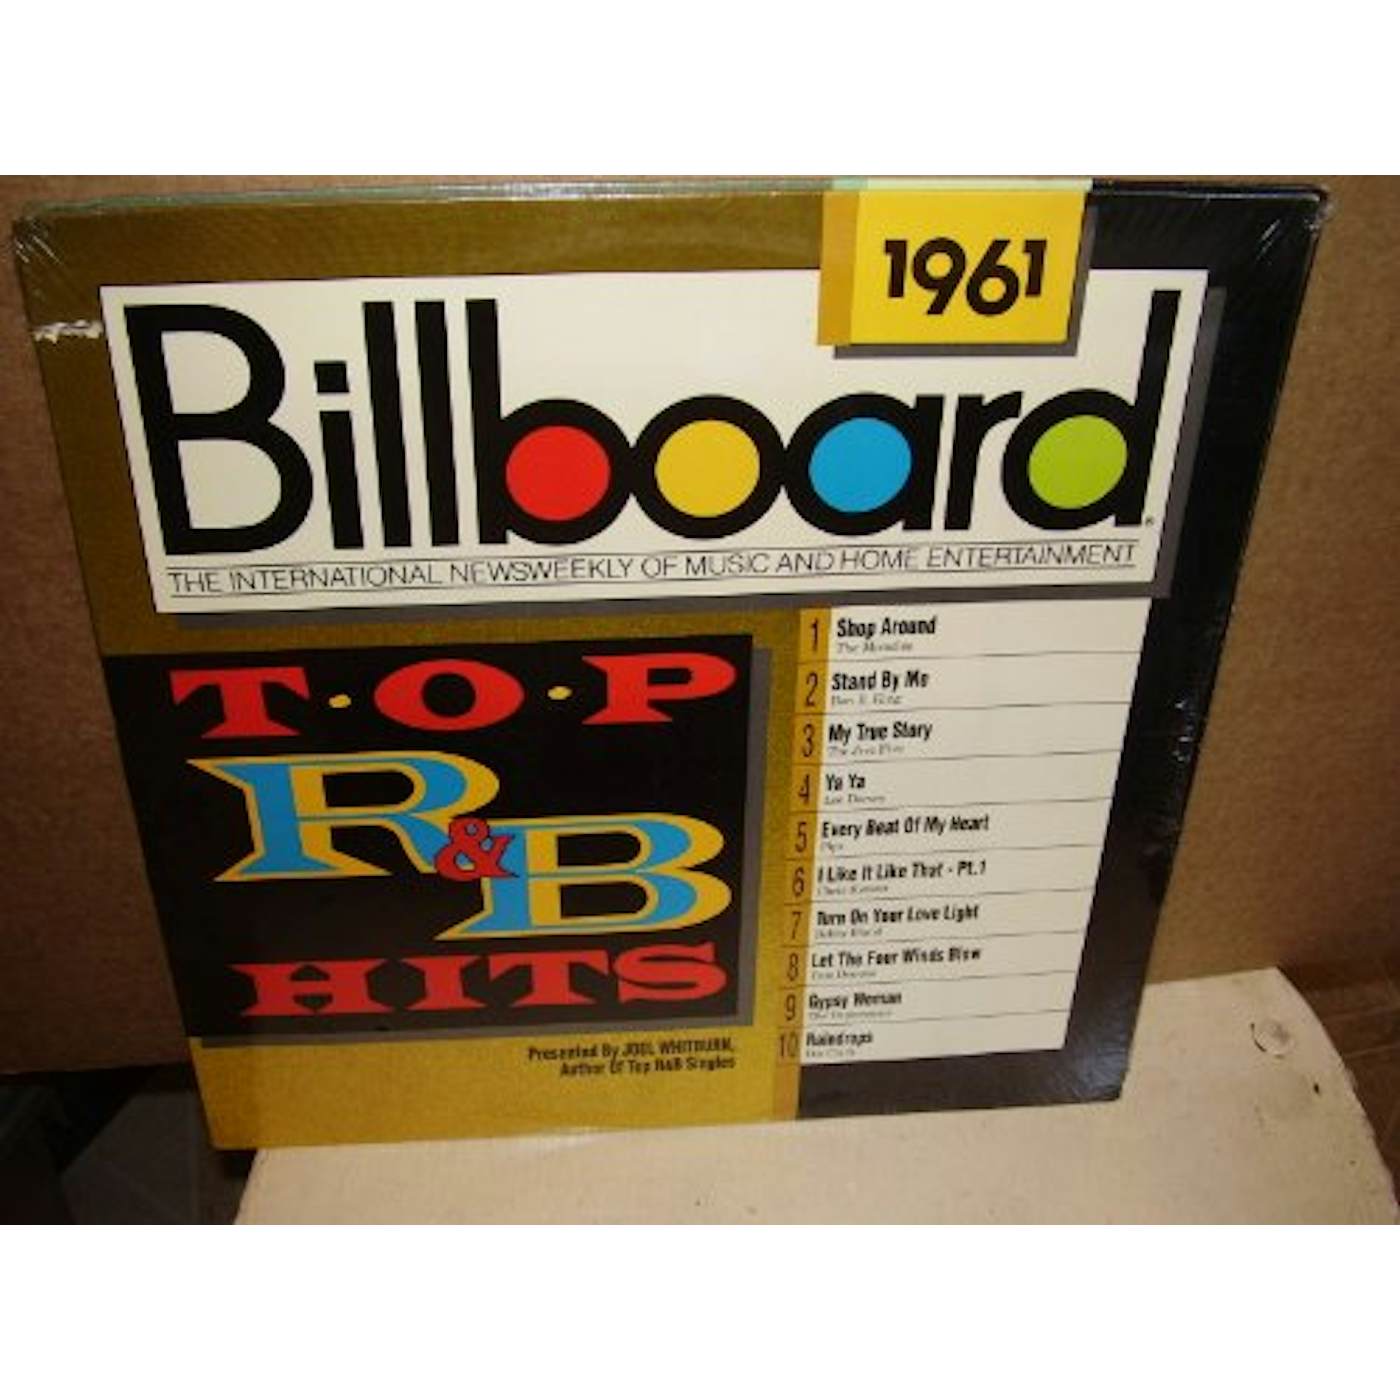 BILLBOARD TOP R&B HITS 1961 / VARIOUS Vinyl Record